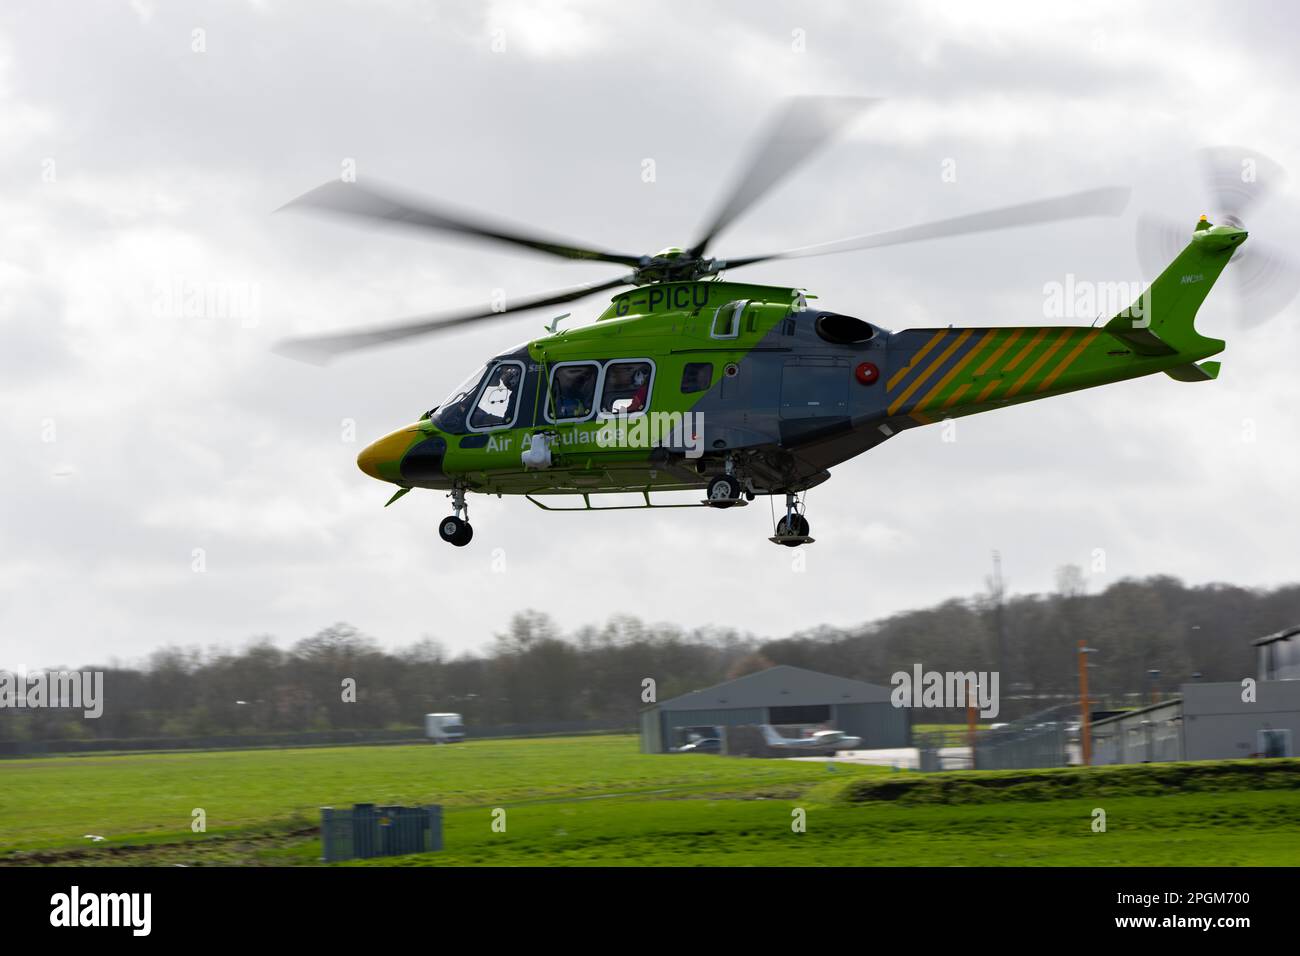 North Weald general aviation aerodrome Essex, Essex and Herts Air ambulance, G-picu, 2017 Leonardo AW169 C/N 69055 helicopter Stock Photo